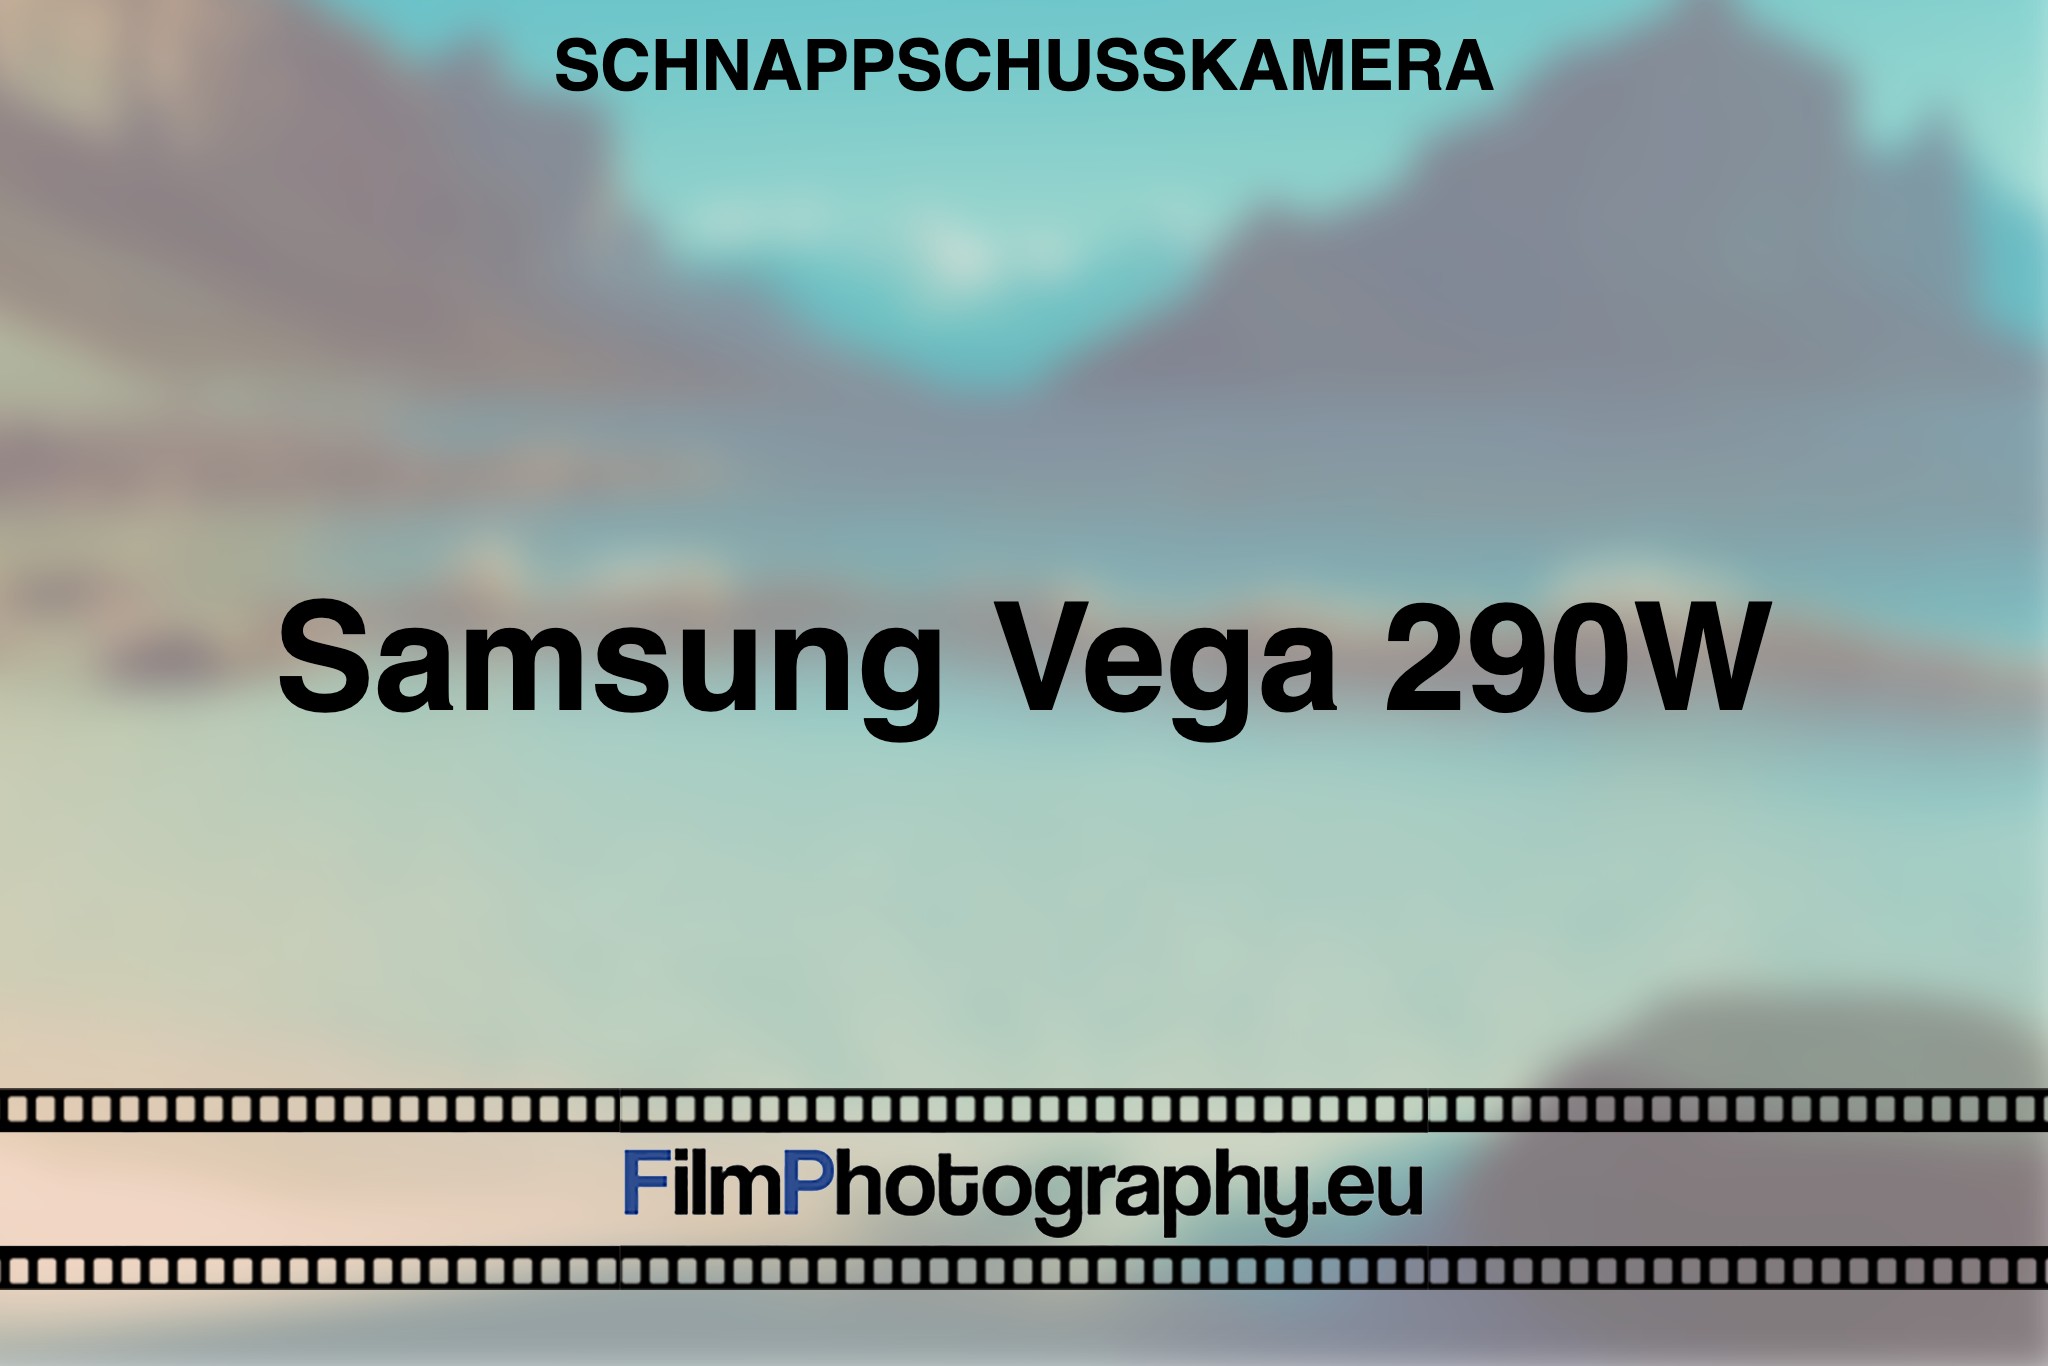 samsung-vega-290w-schnappschusskamera-bnv